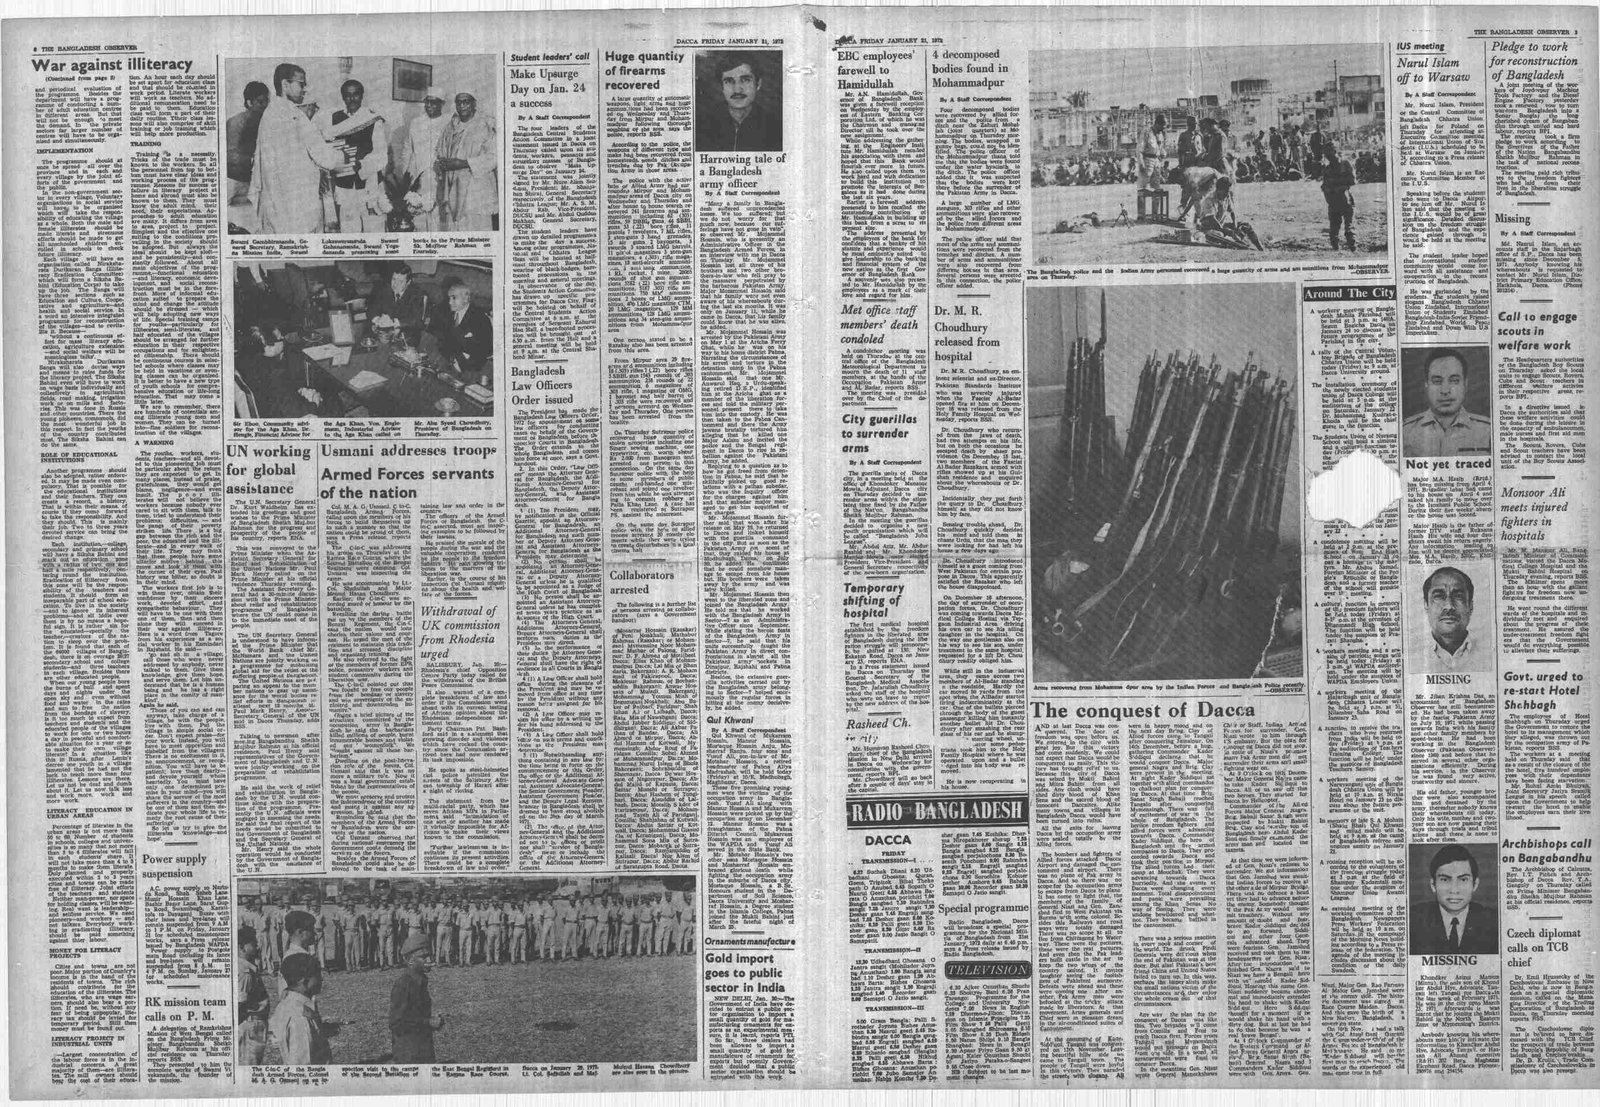 21JAN1972-Bangladesh Observer-Regular-Page 3 and 6